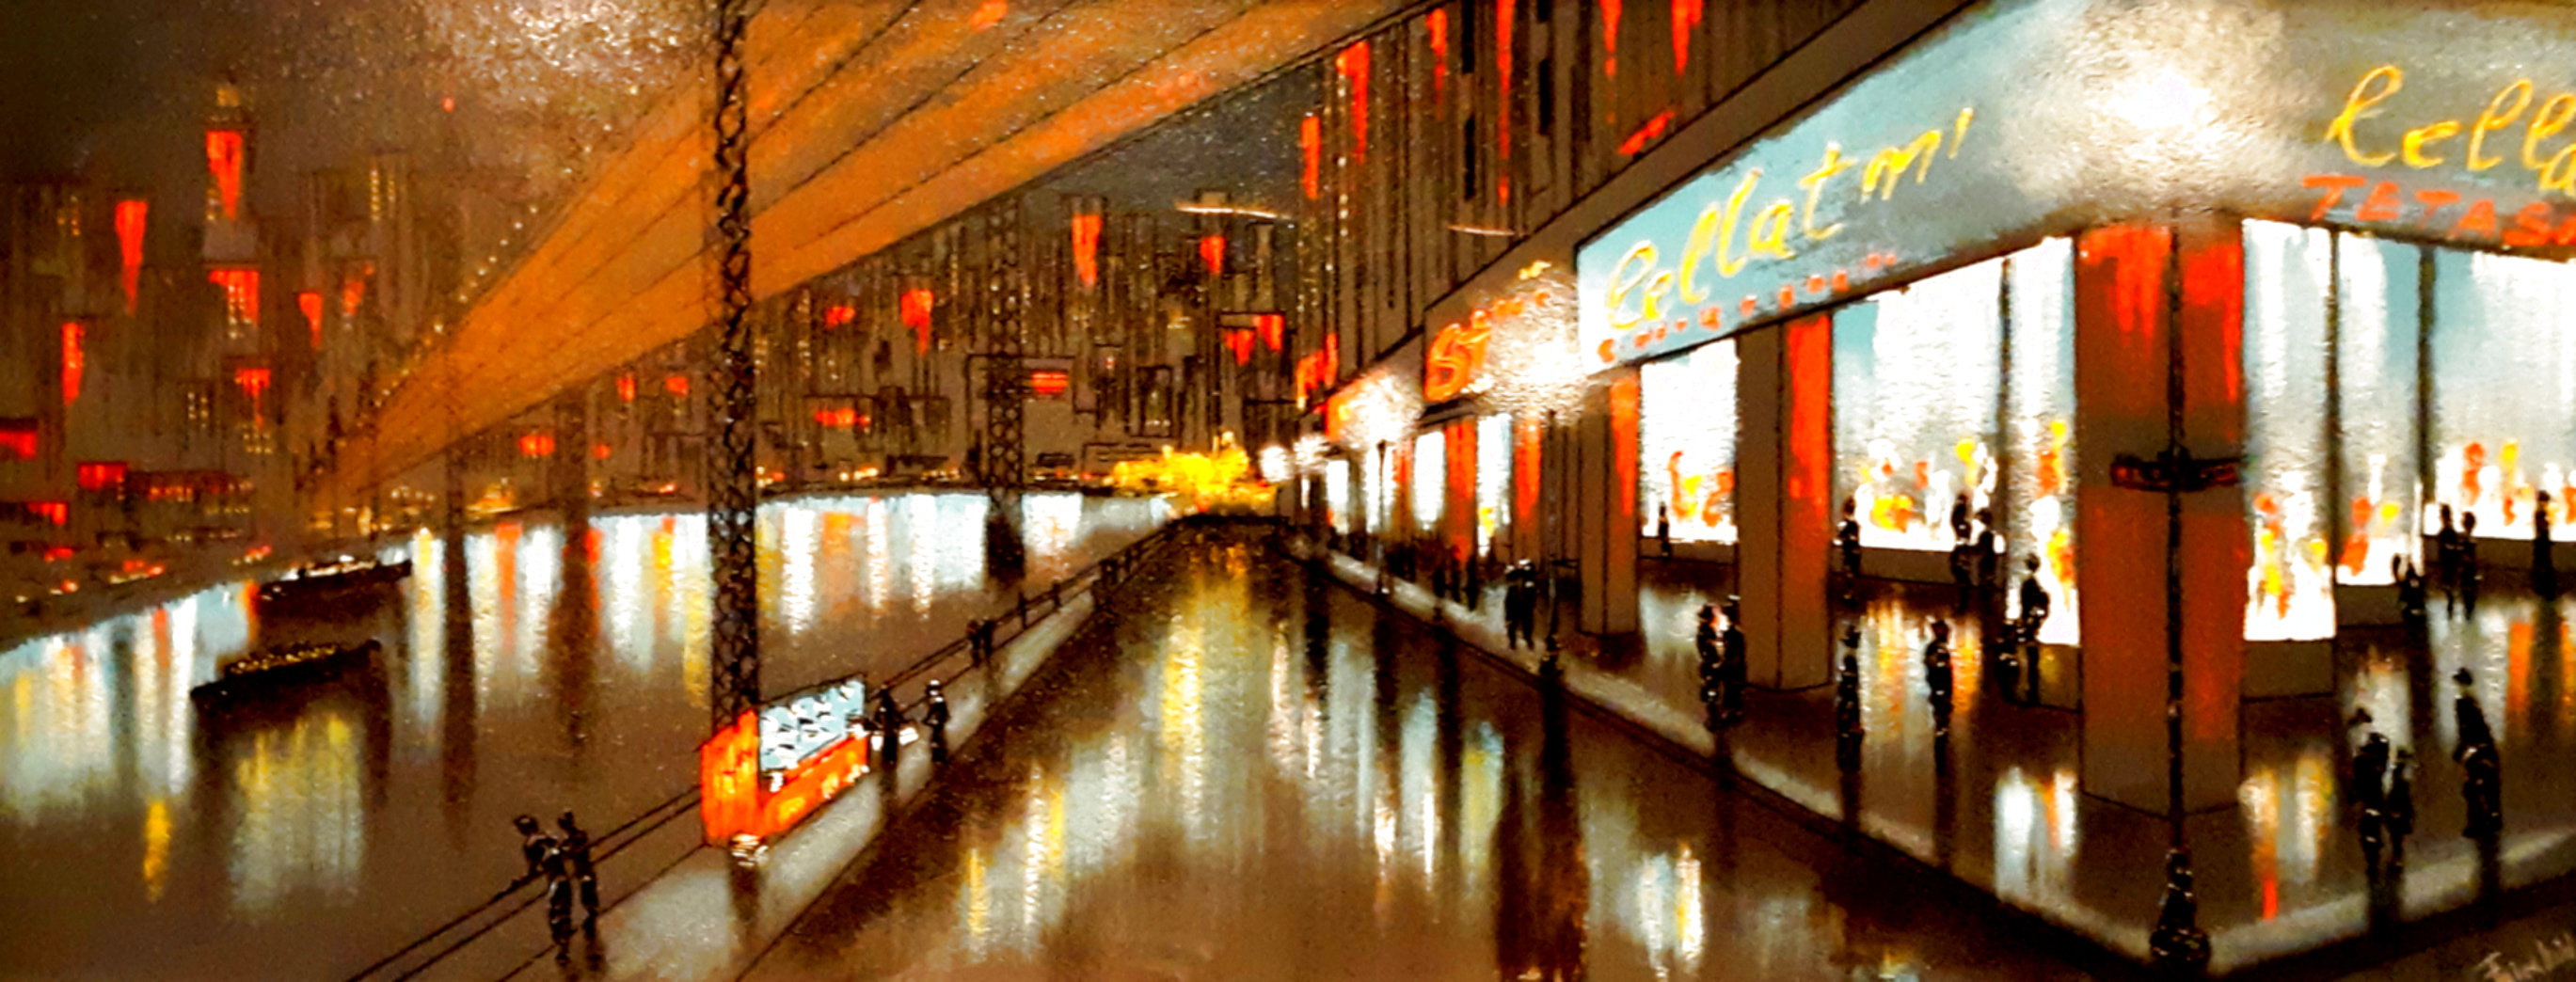 Untitled Street Scene 20x50 Huge Original Painting by Roy Fairchild-Woodard